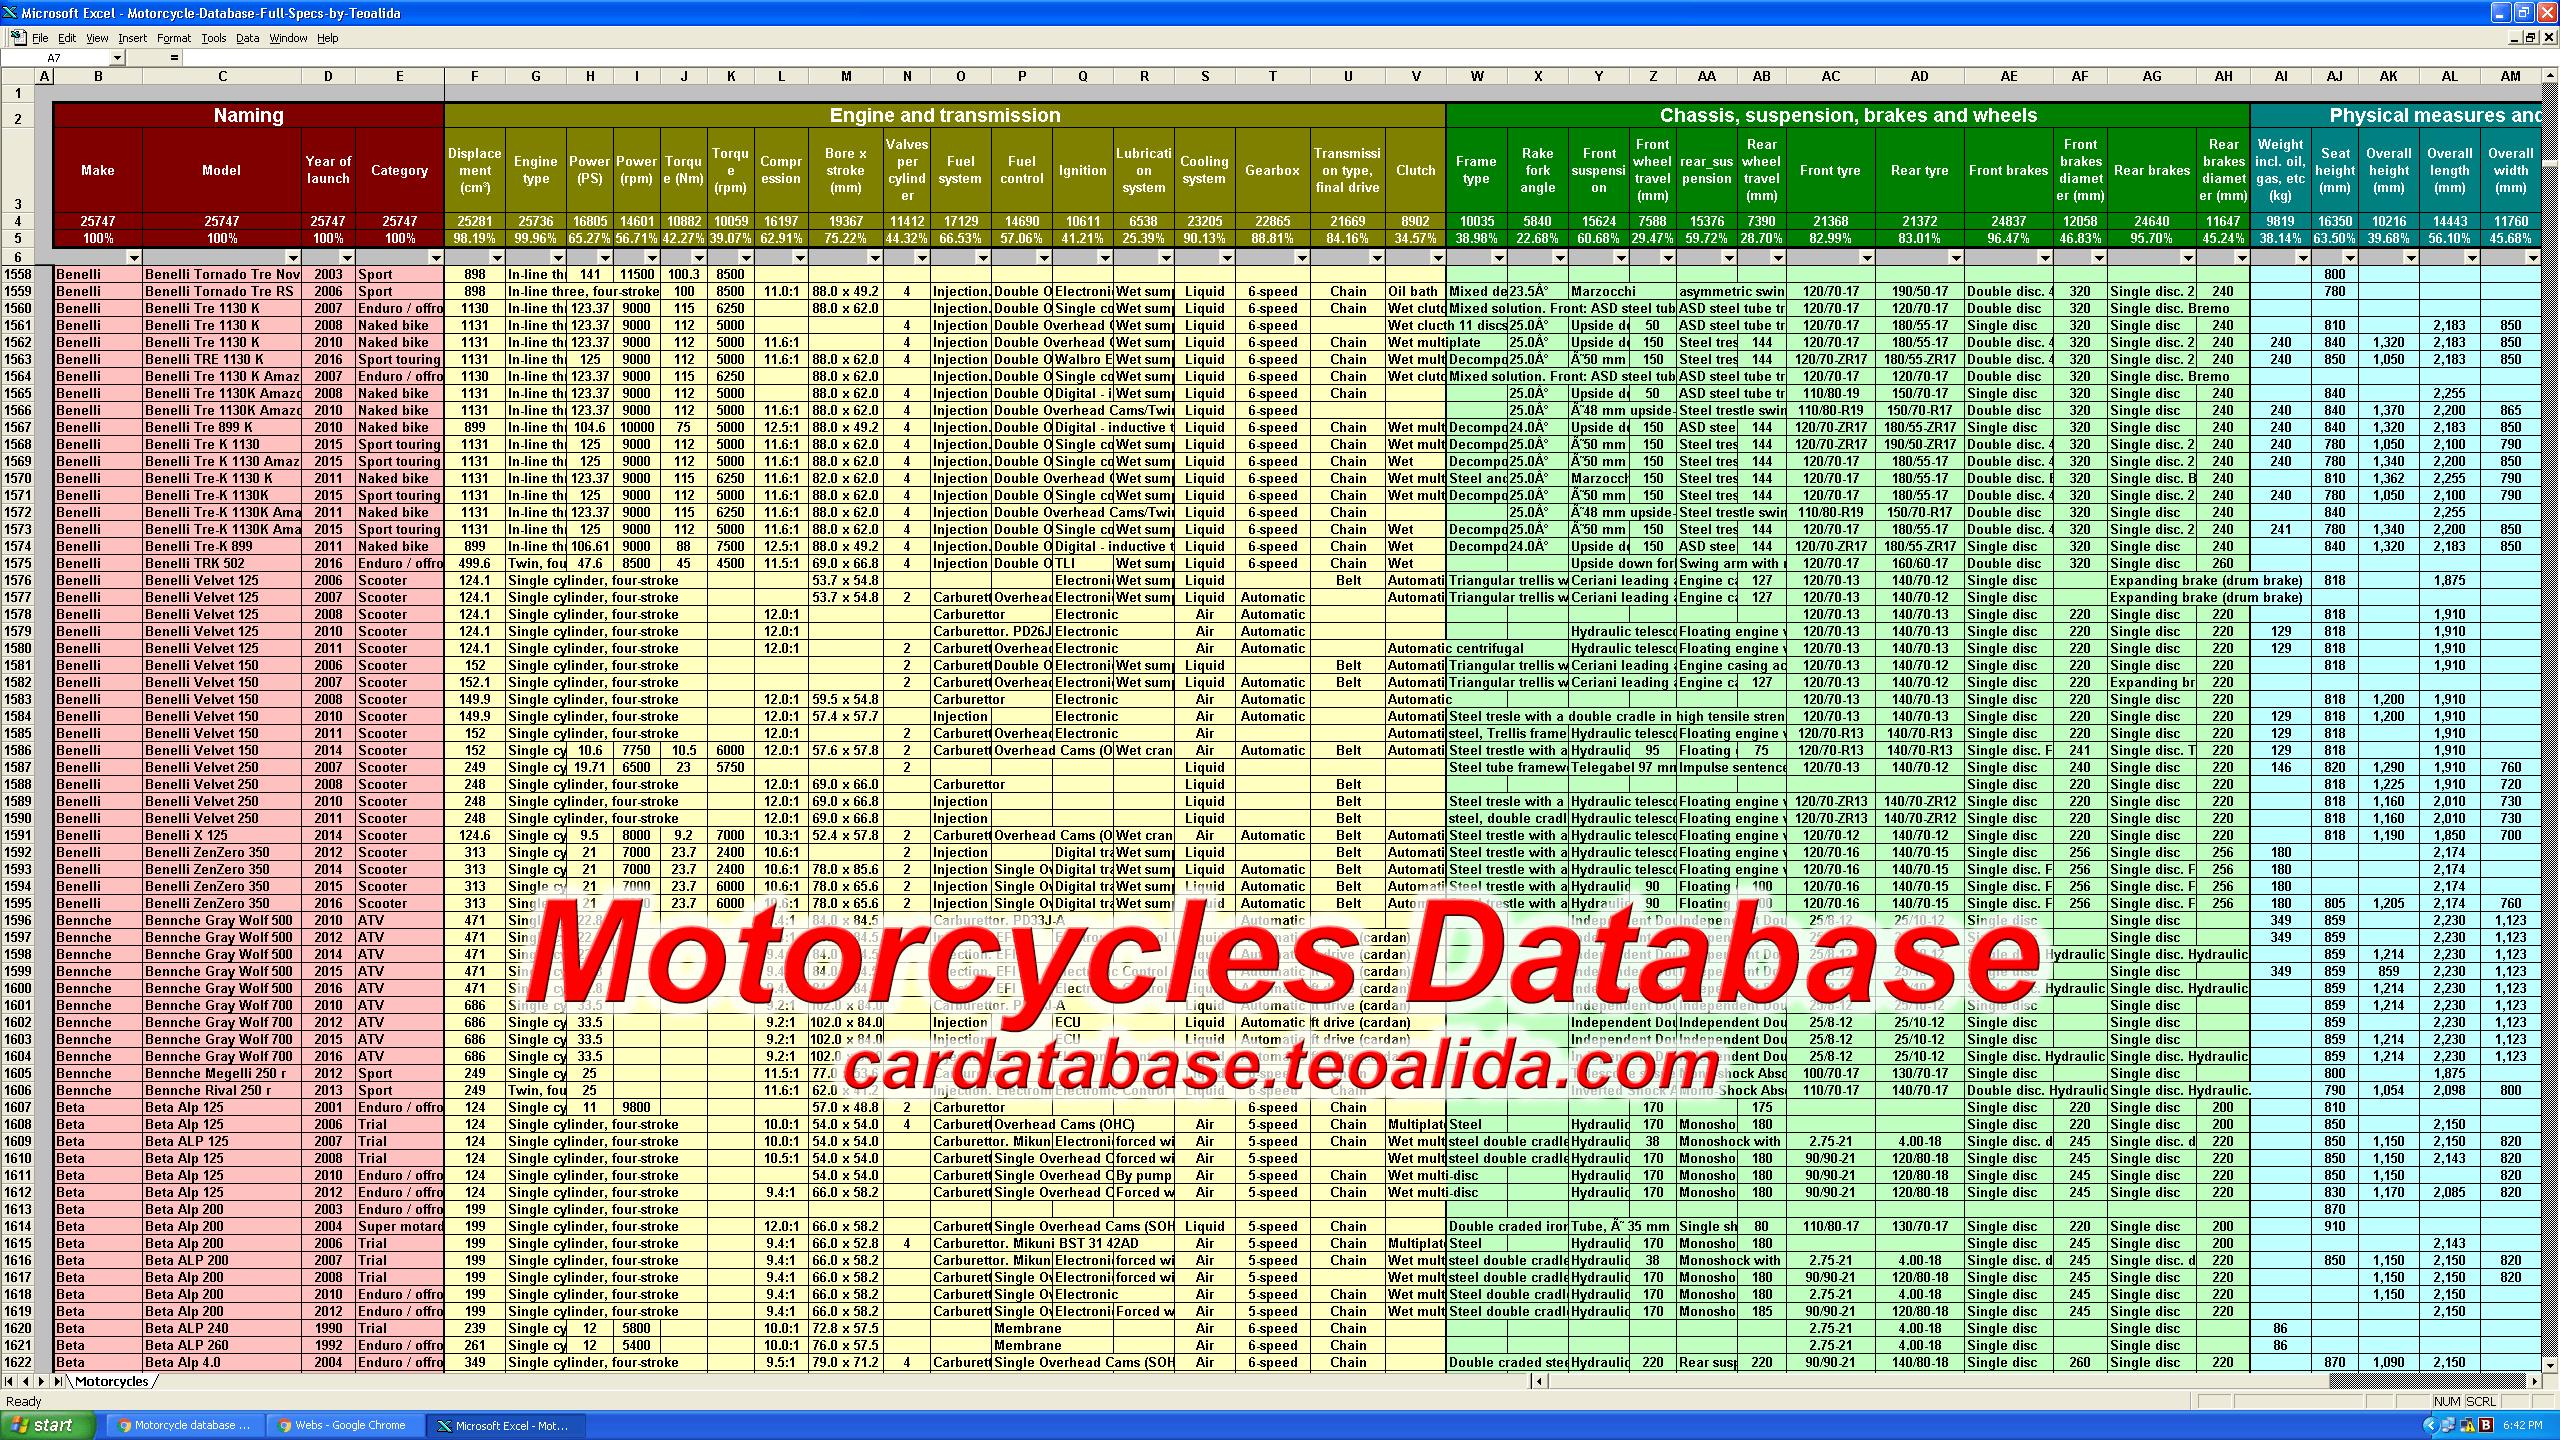 Car Database Year Make Model Trim Engines Specs Xls inside dimensions 2560 X 1440